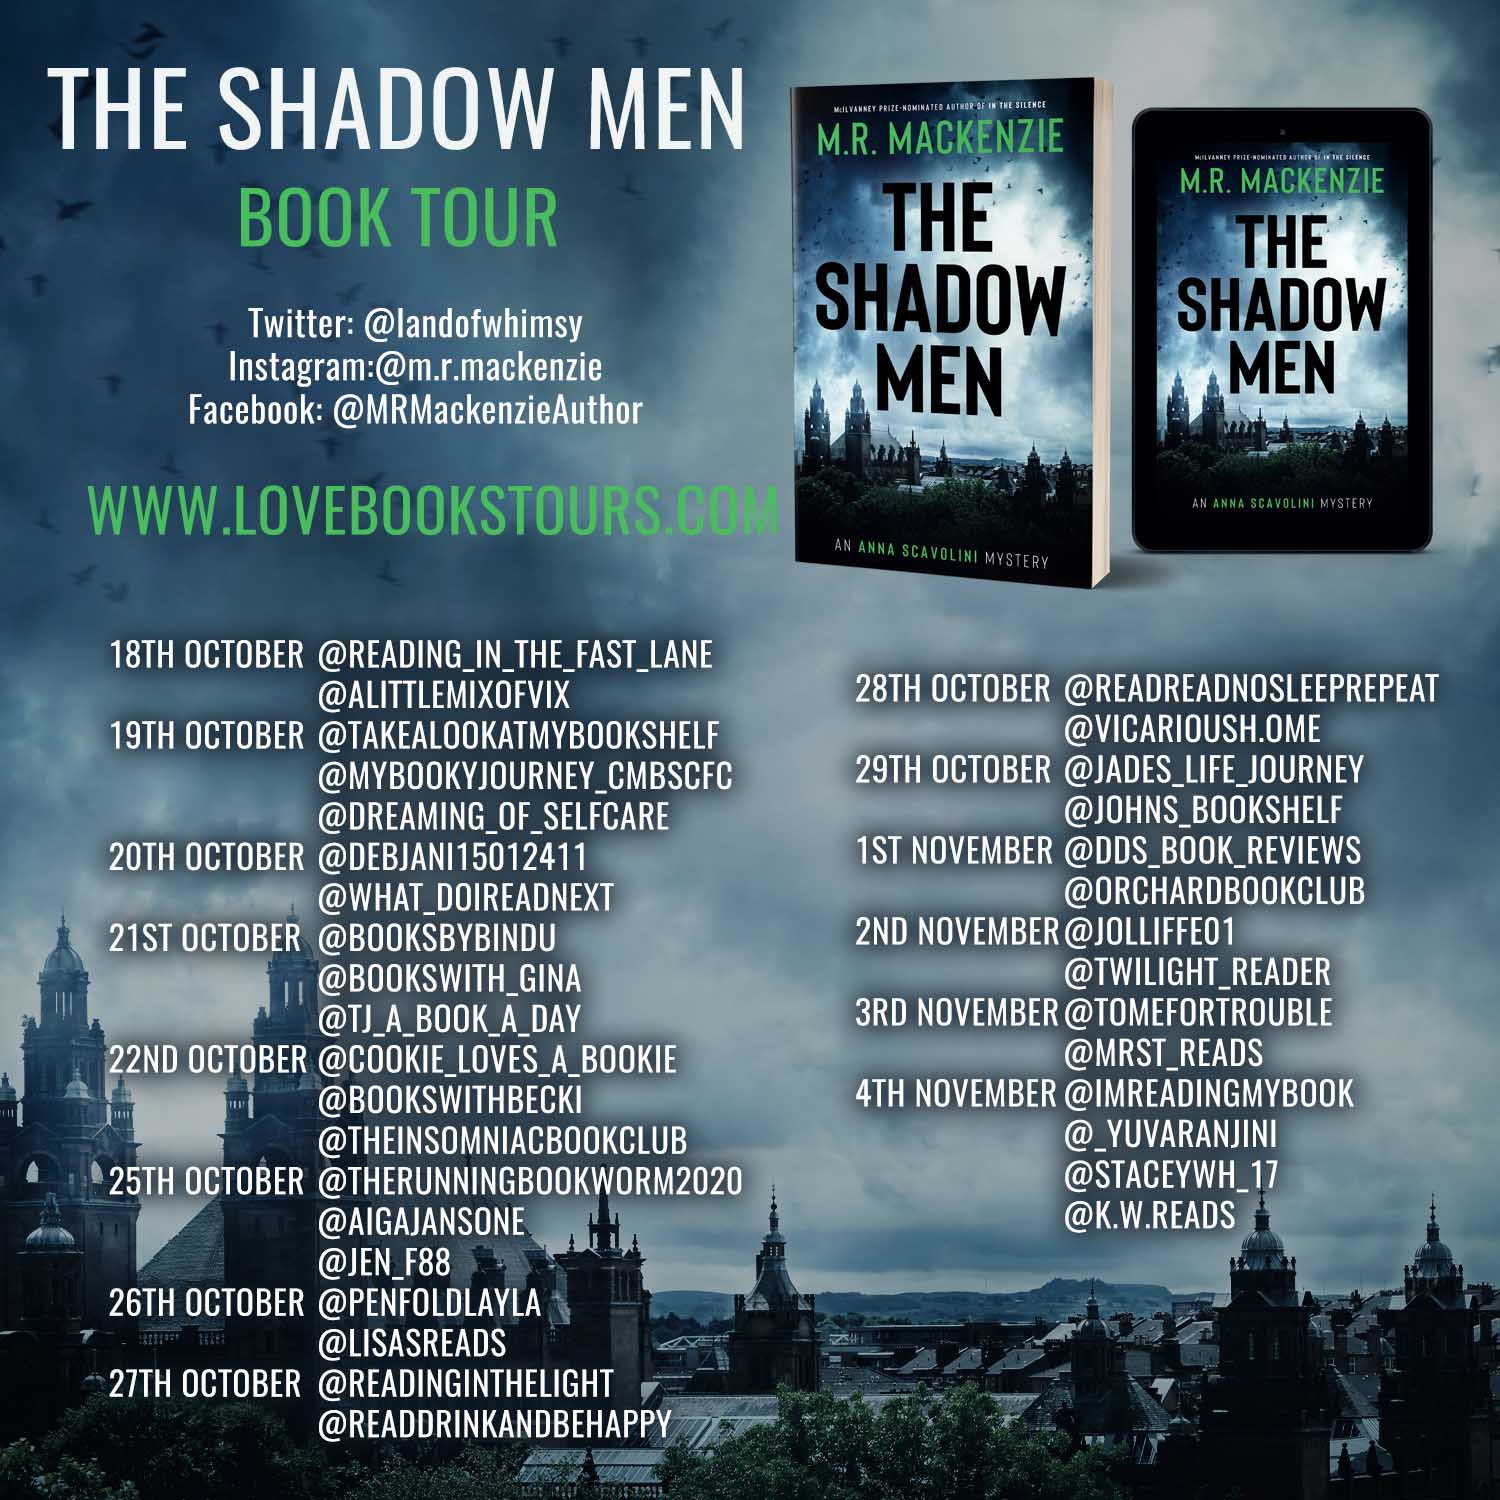 The Shadow Men book tour schedule